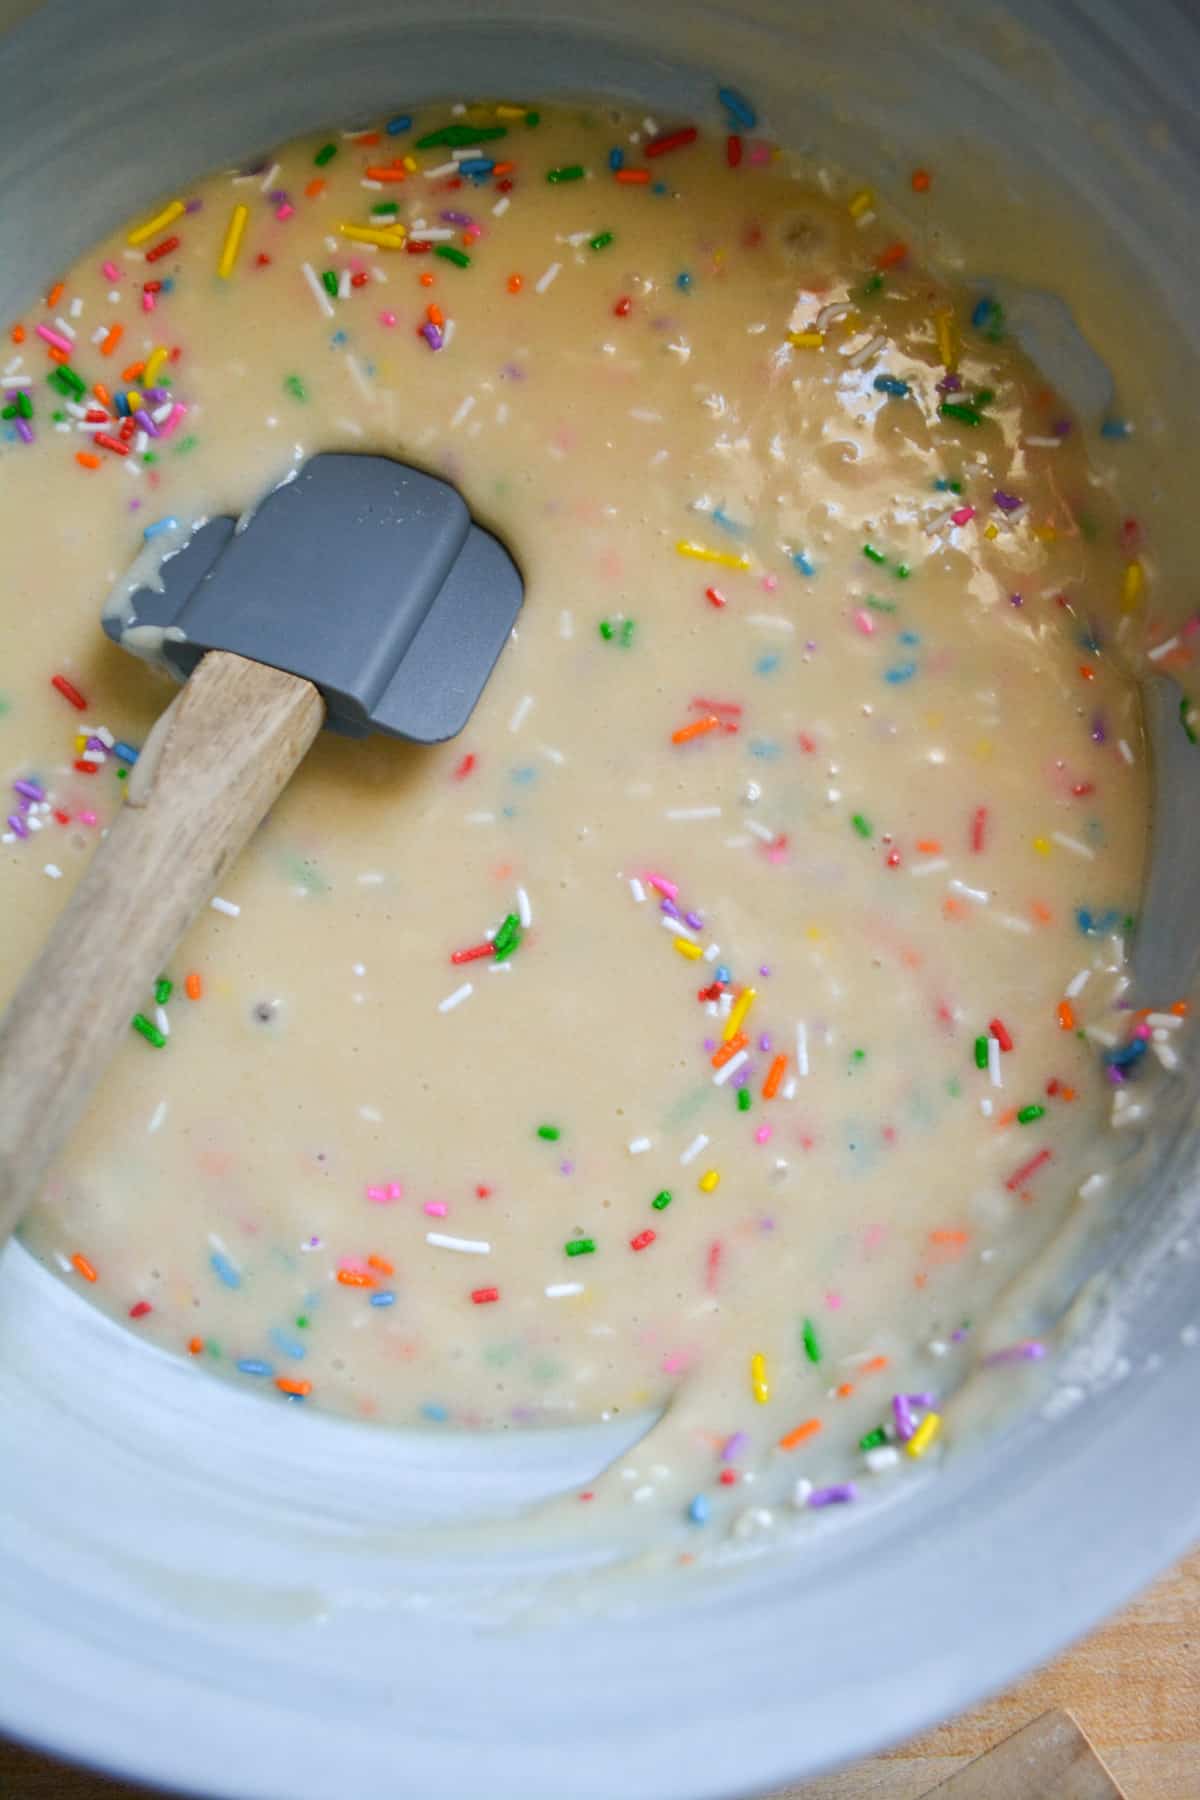 Rainbow sprinkles mixed into the vegan funfetti cake batter.